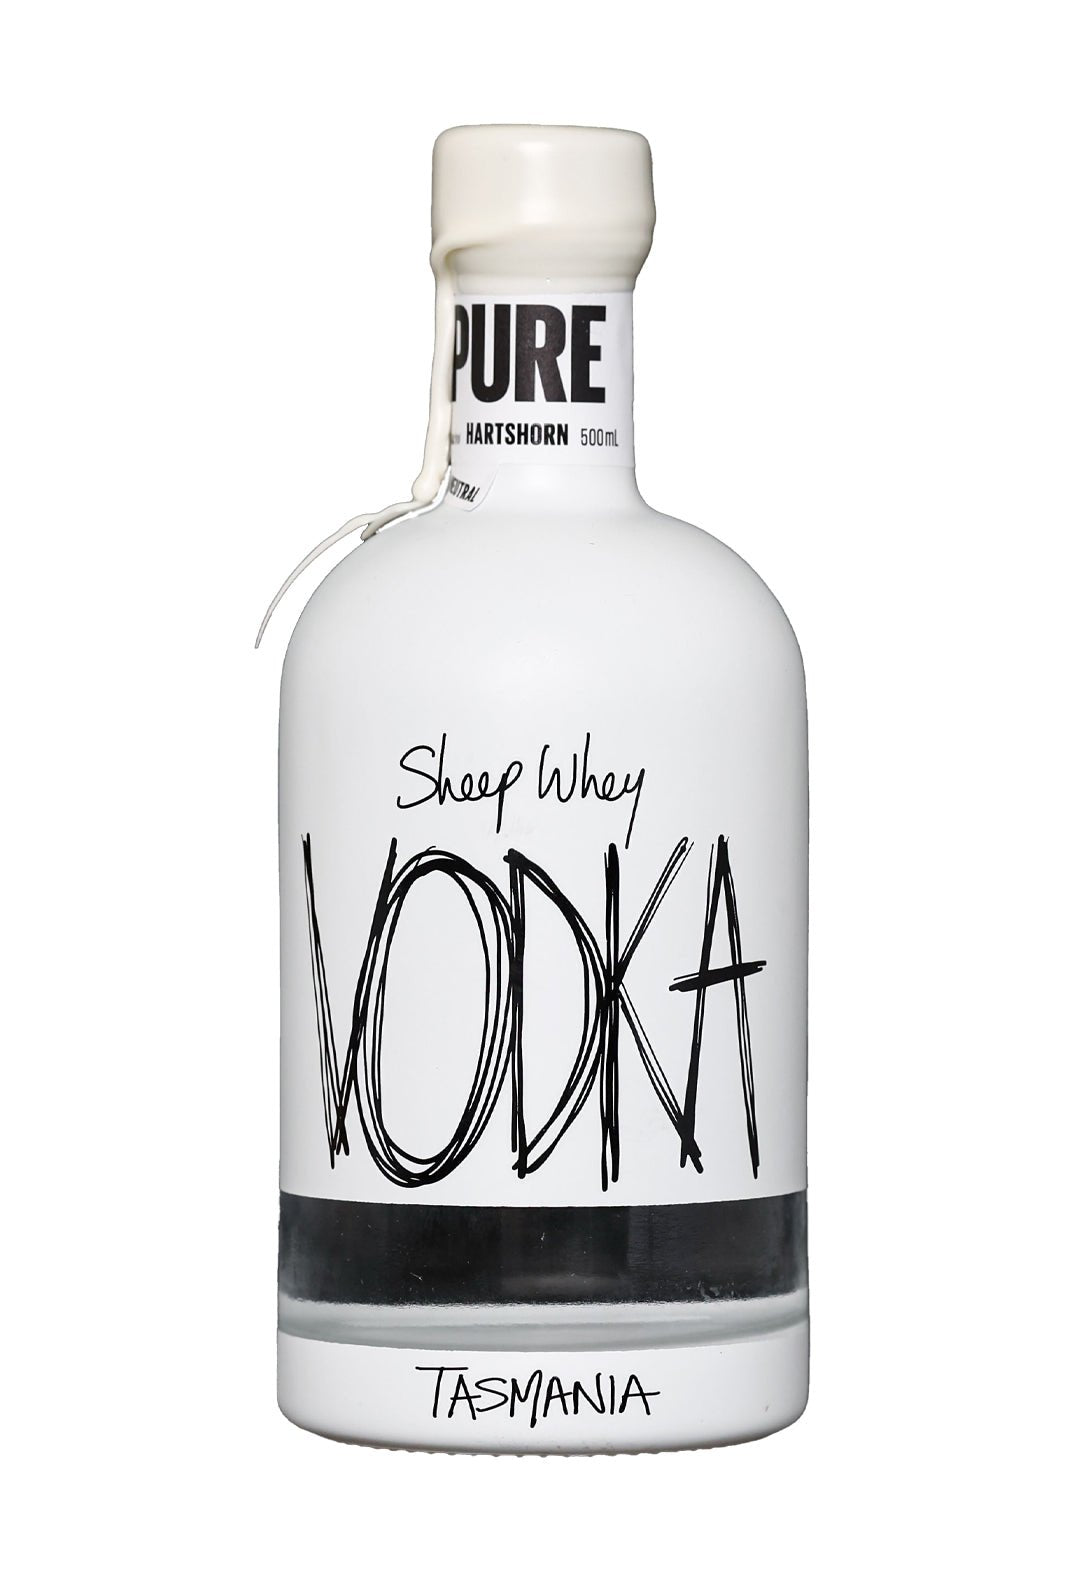 Hartshorn Sheep Whey Pure Vodka 40% 500ml | Vodka | Shop online at Spirits of France